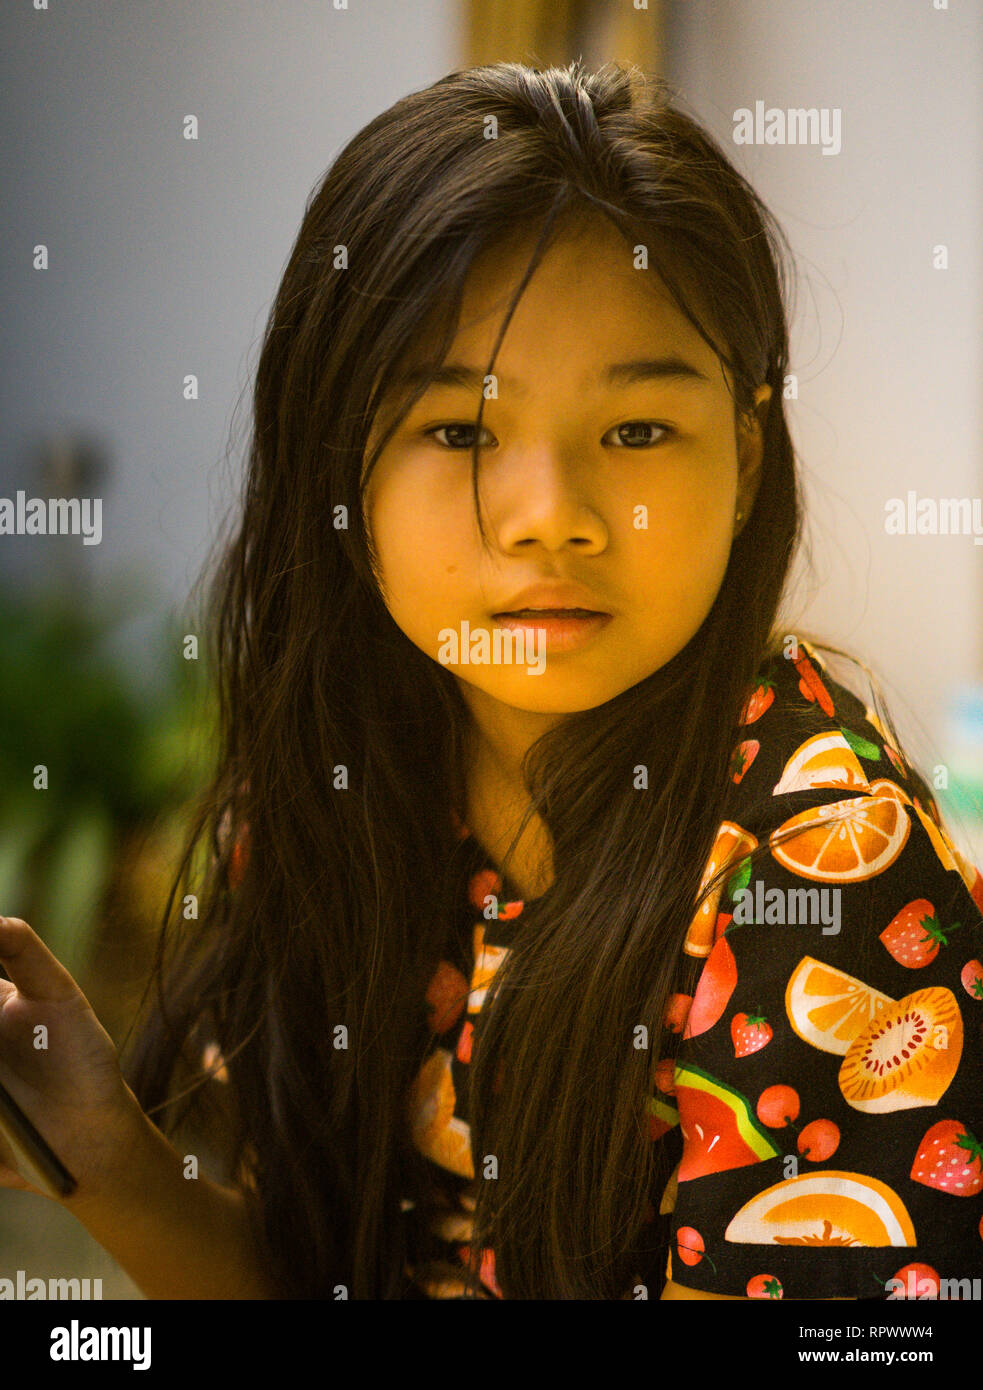 A portrait of a pretty Asian girl. Stock Photo